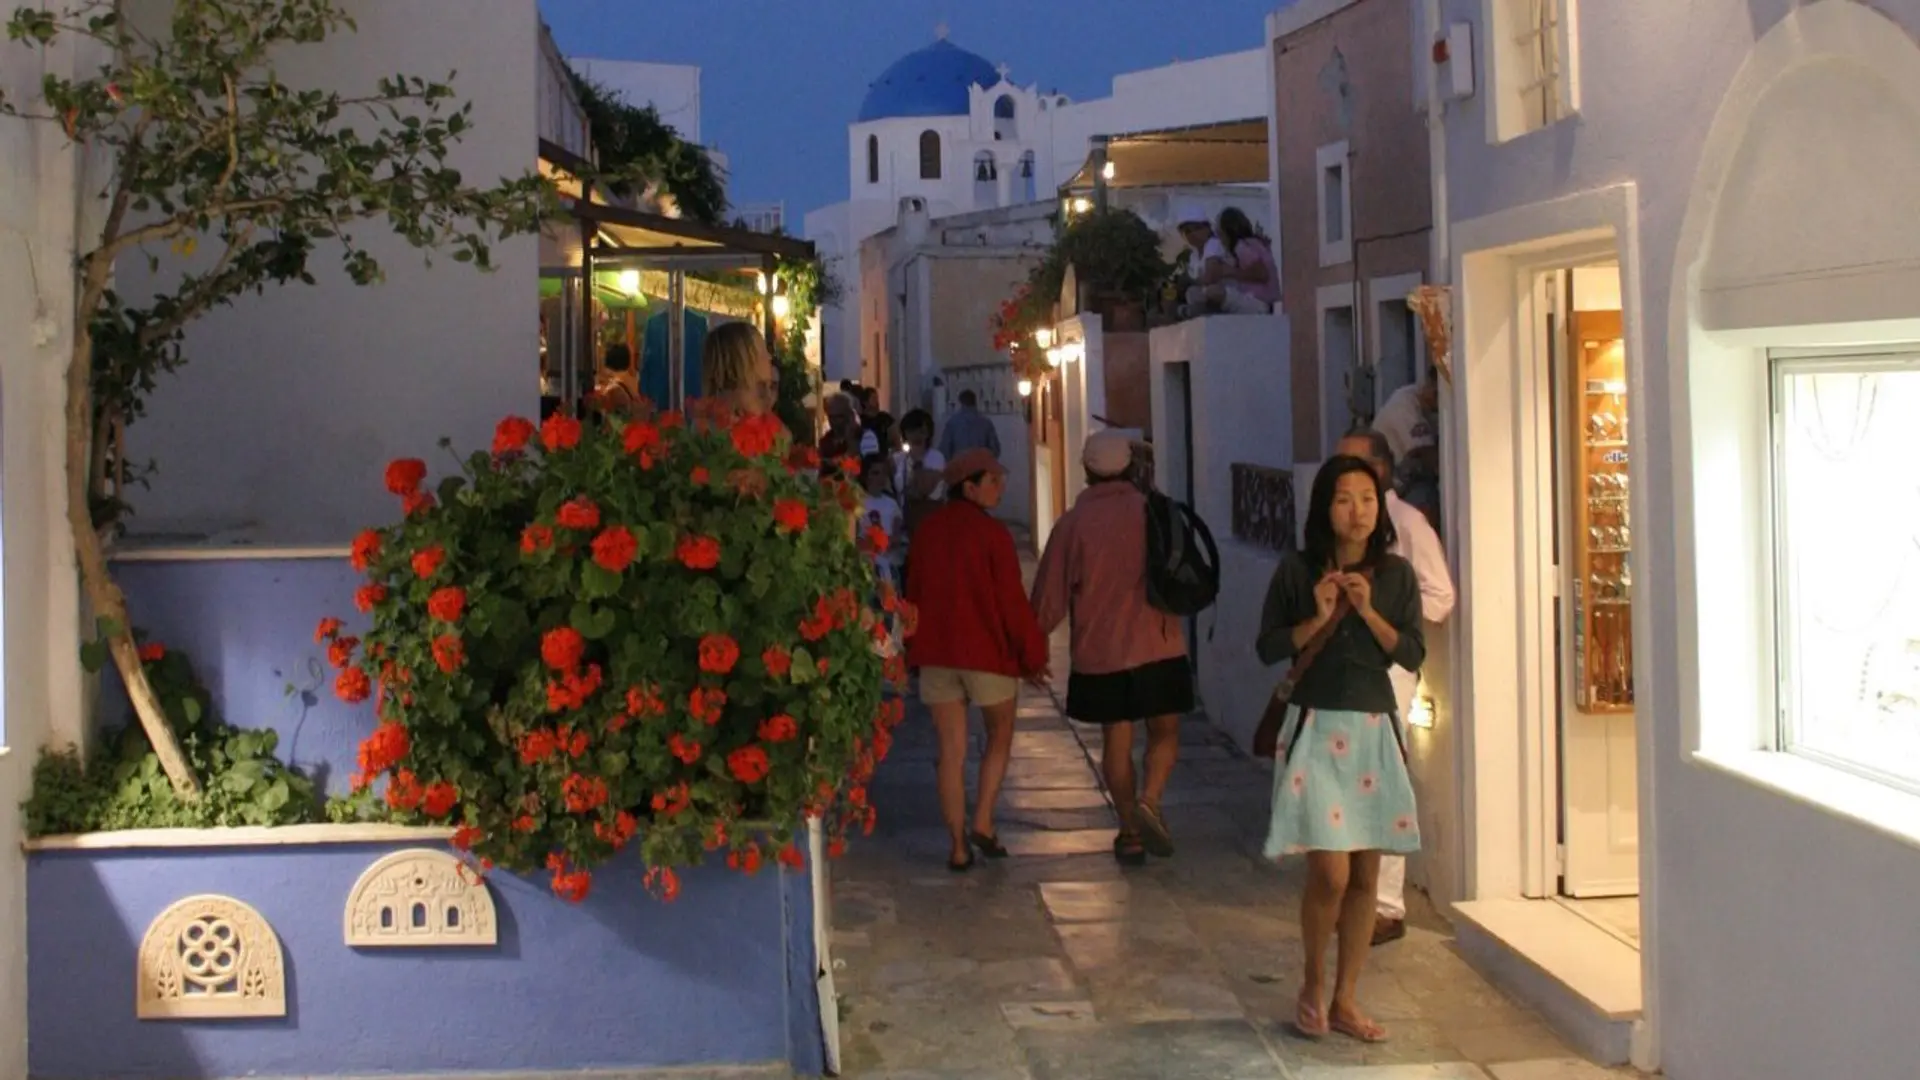 Destinations Articles - Santorini Travel Guide